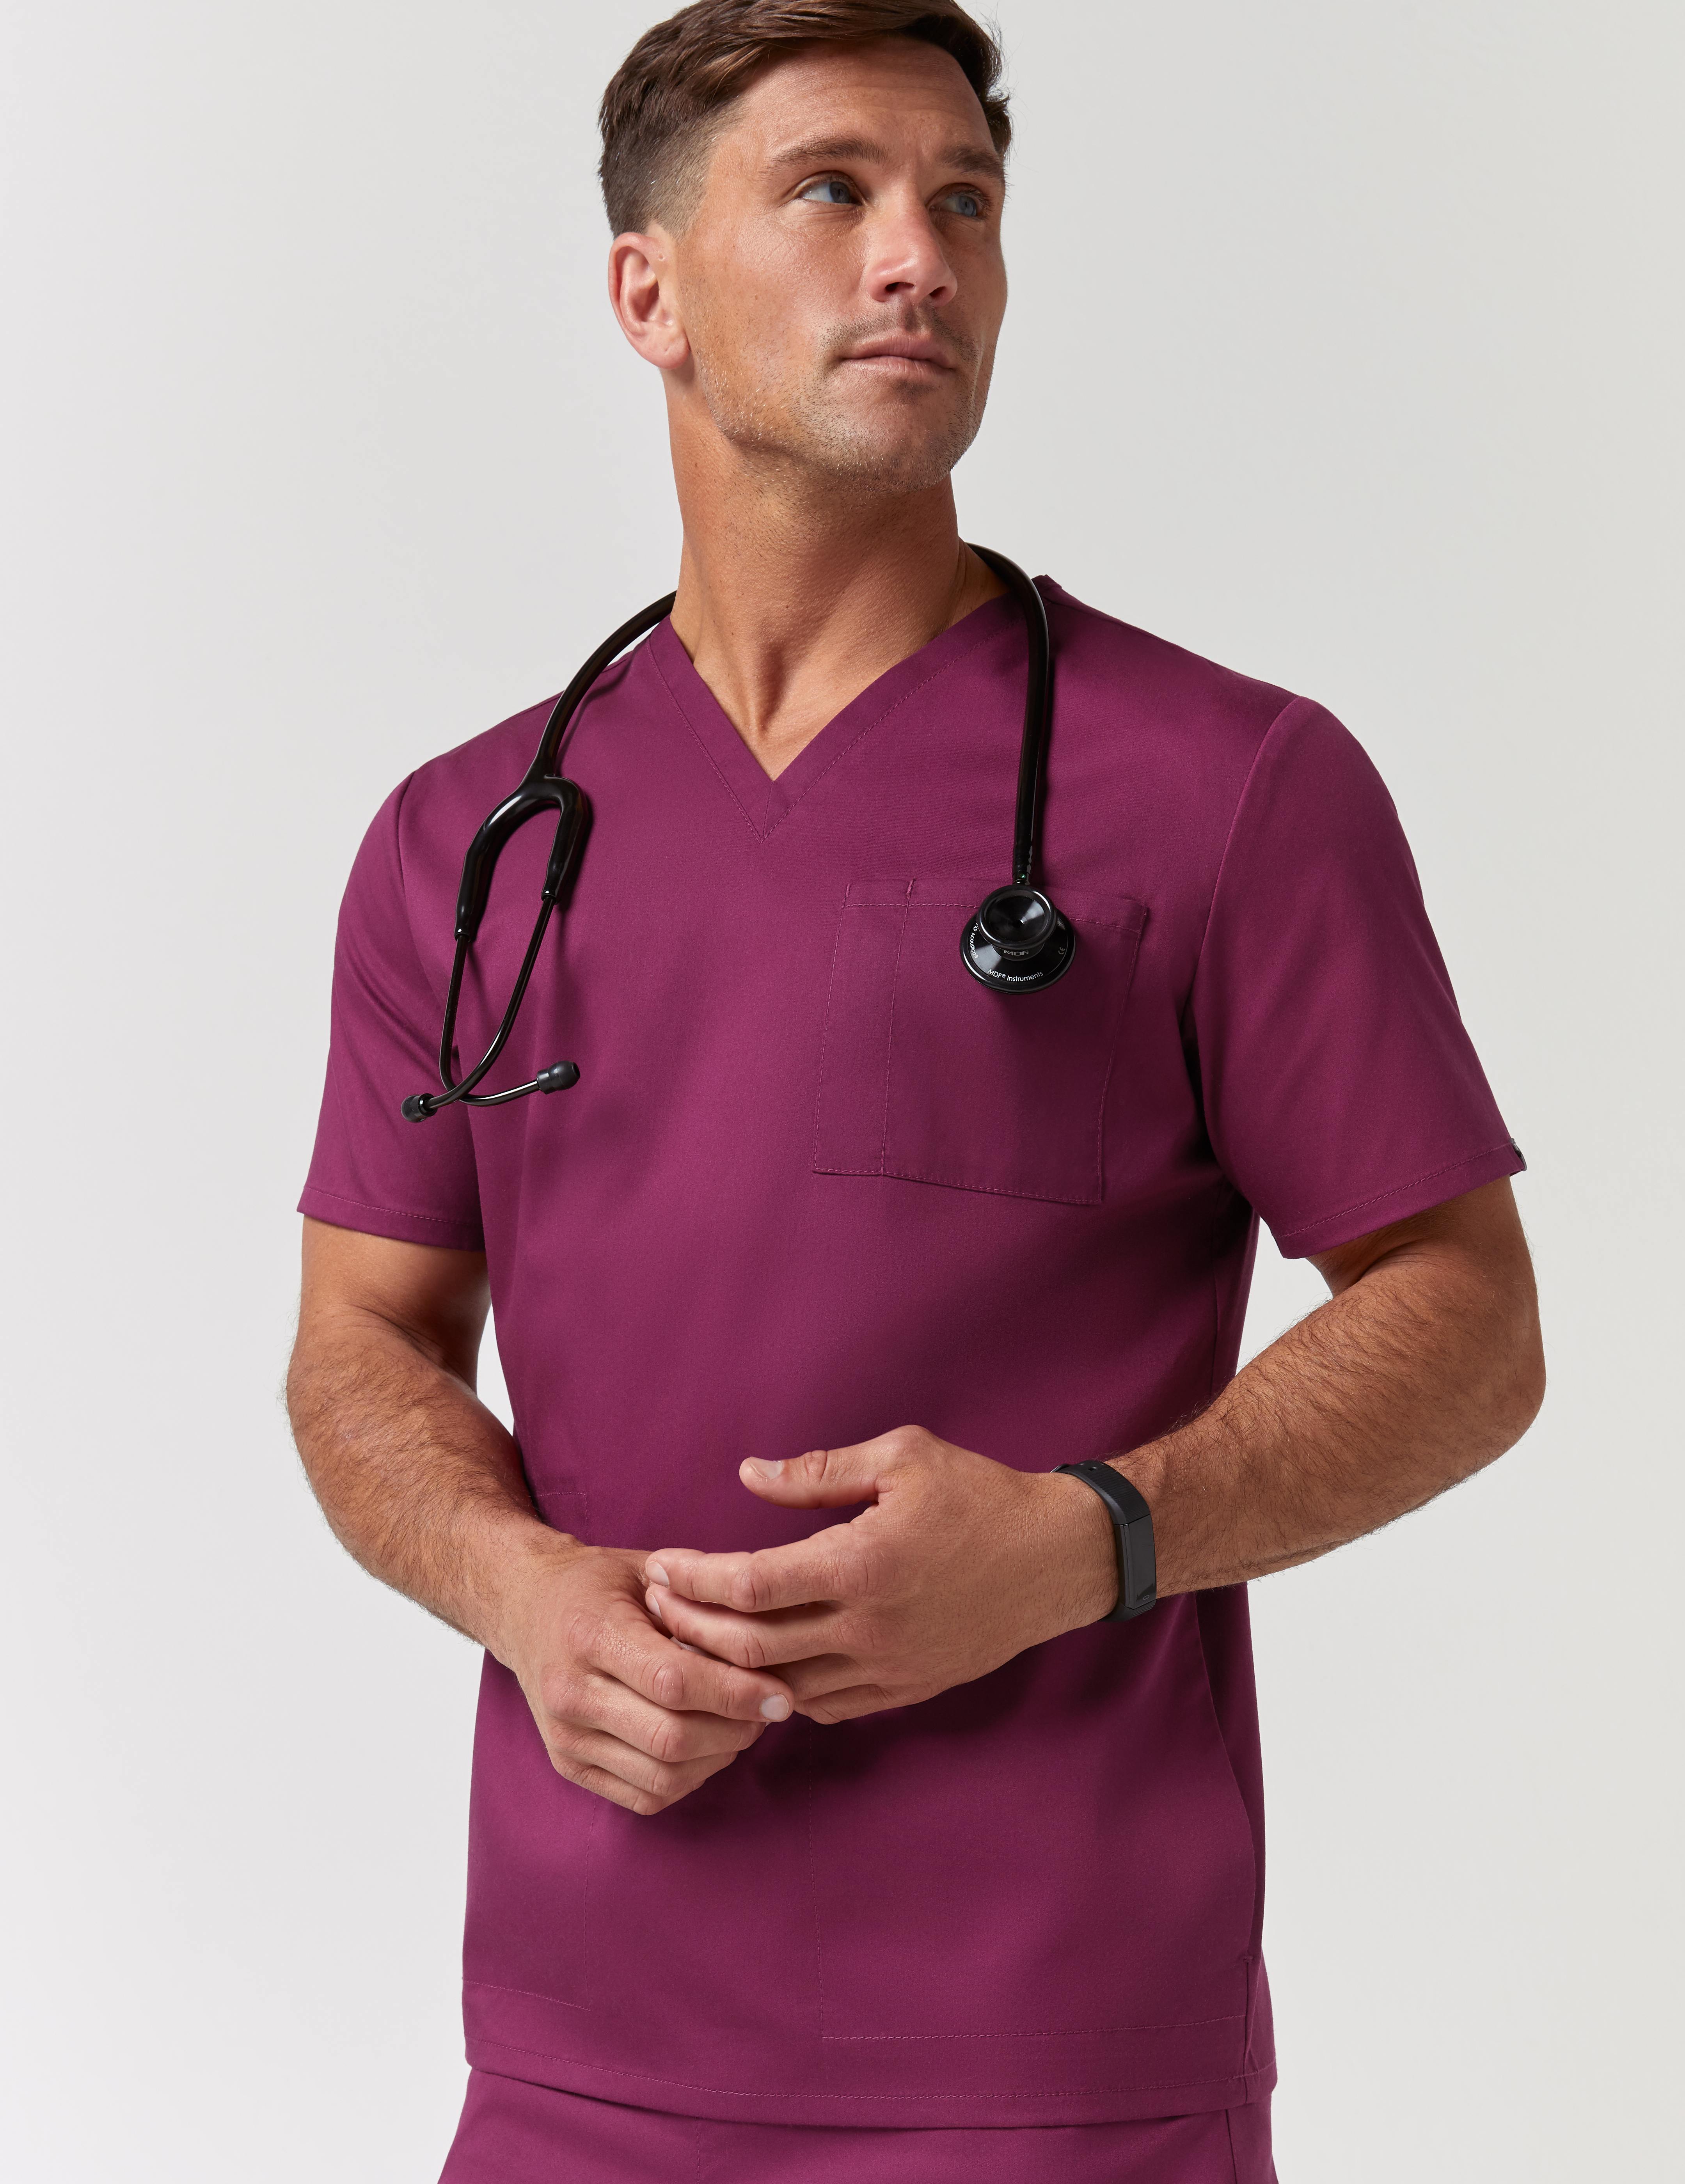 Man wearing v-neck 3 pocket top scrubs